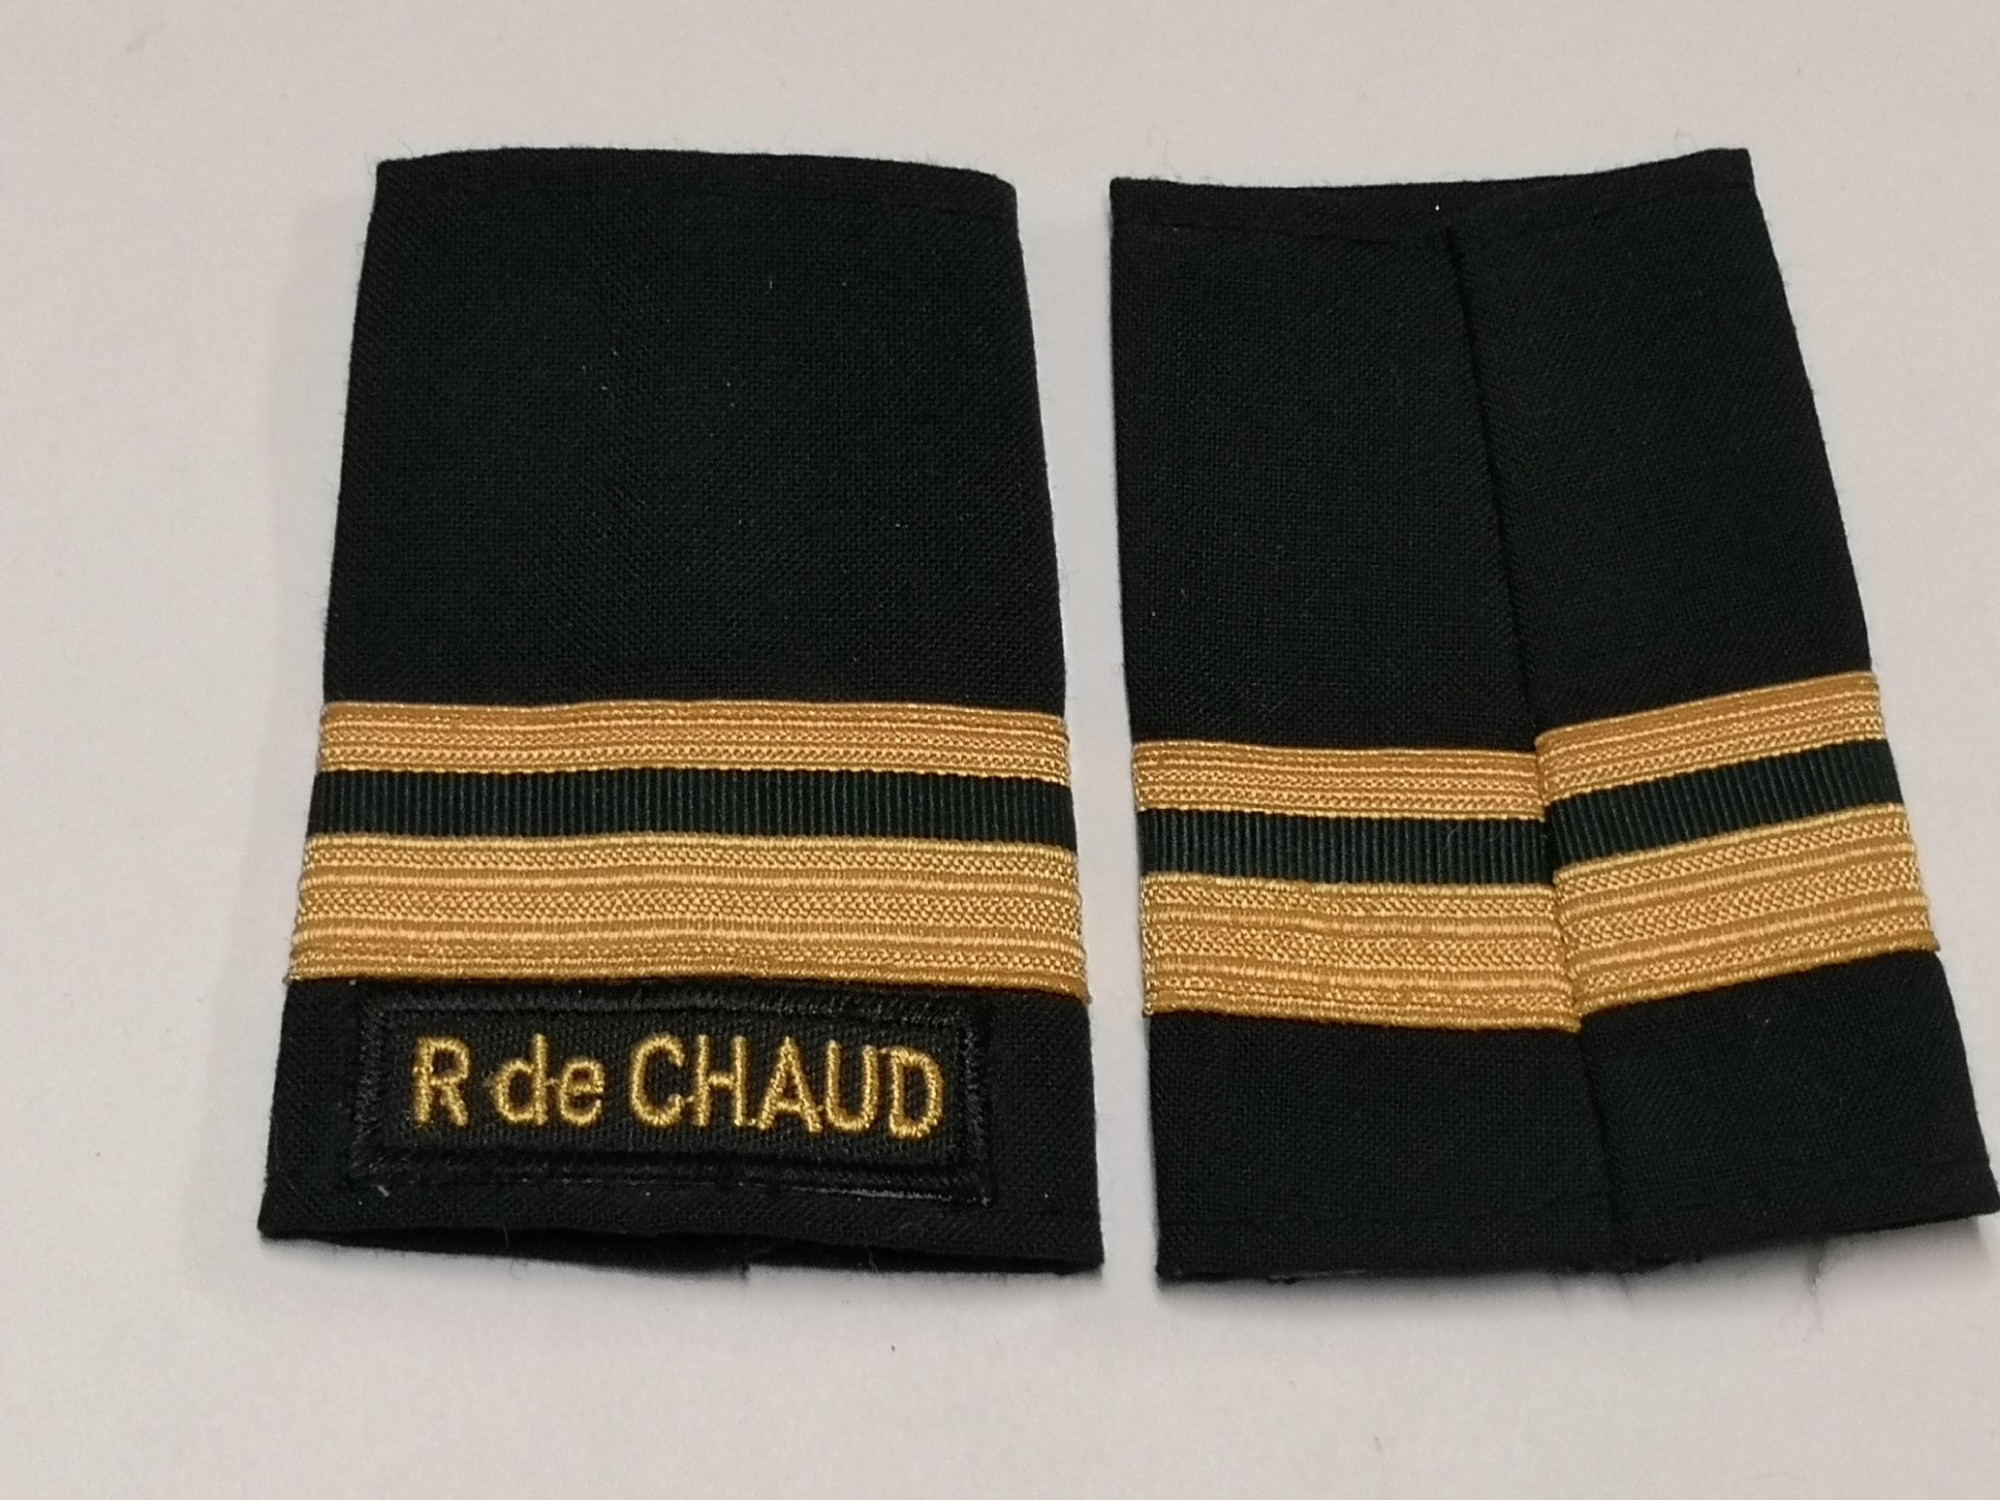 Canadian Armed Forces Dark Green Rank Epaulets R de CHAUD - Lieutenant